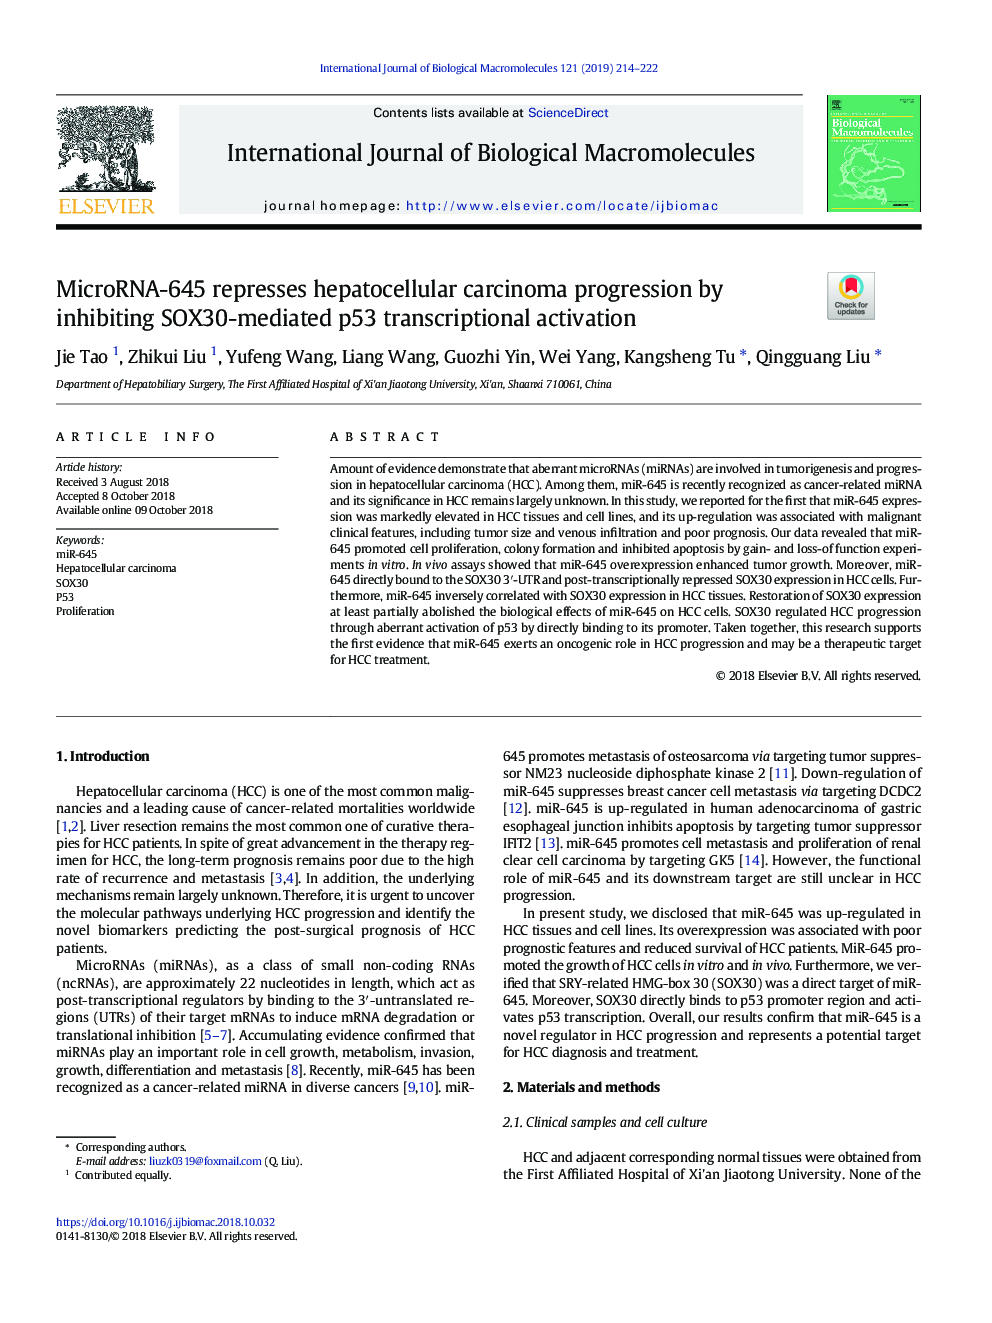 MicroRNA-645 represses hepatocellular carcinoma progression by inhibiting SOX30-mediated p53 transcriptional activation